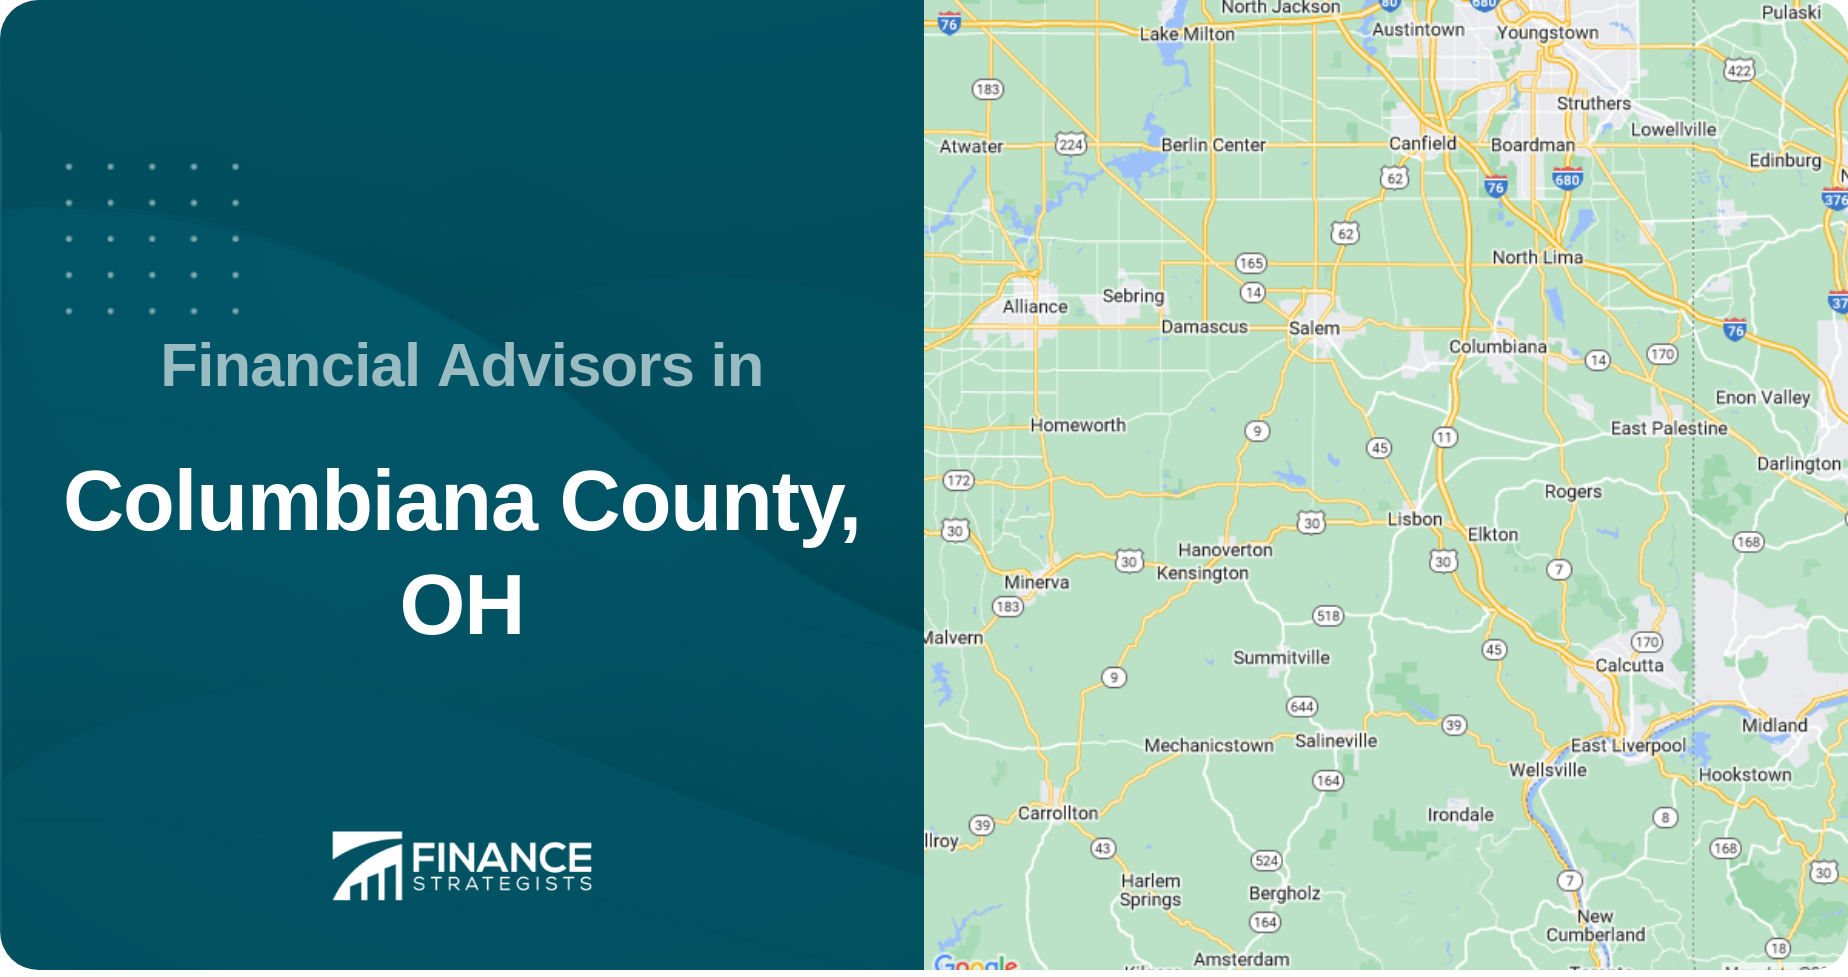 Financial Advisors in Columbiana County, OH